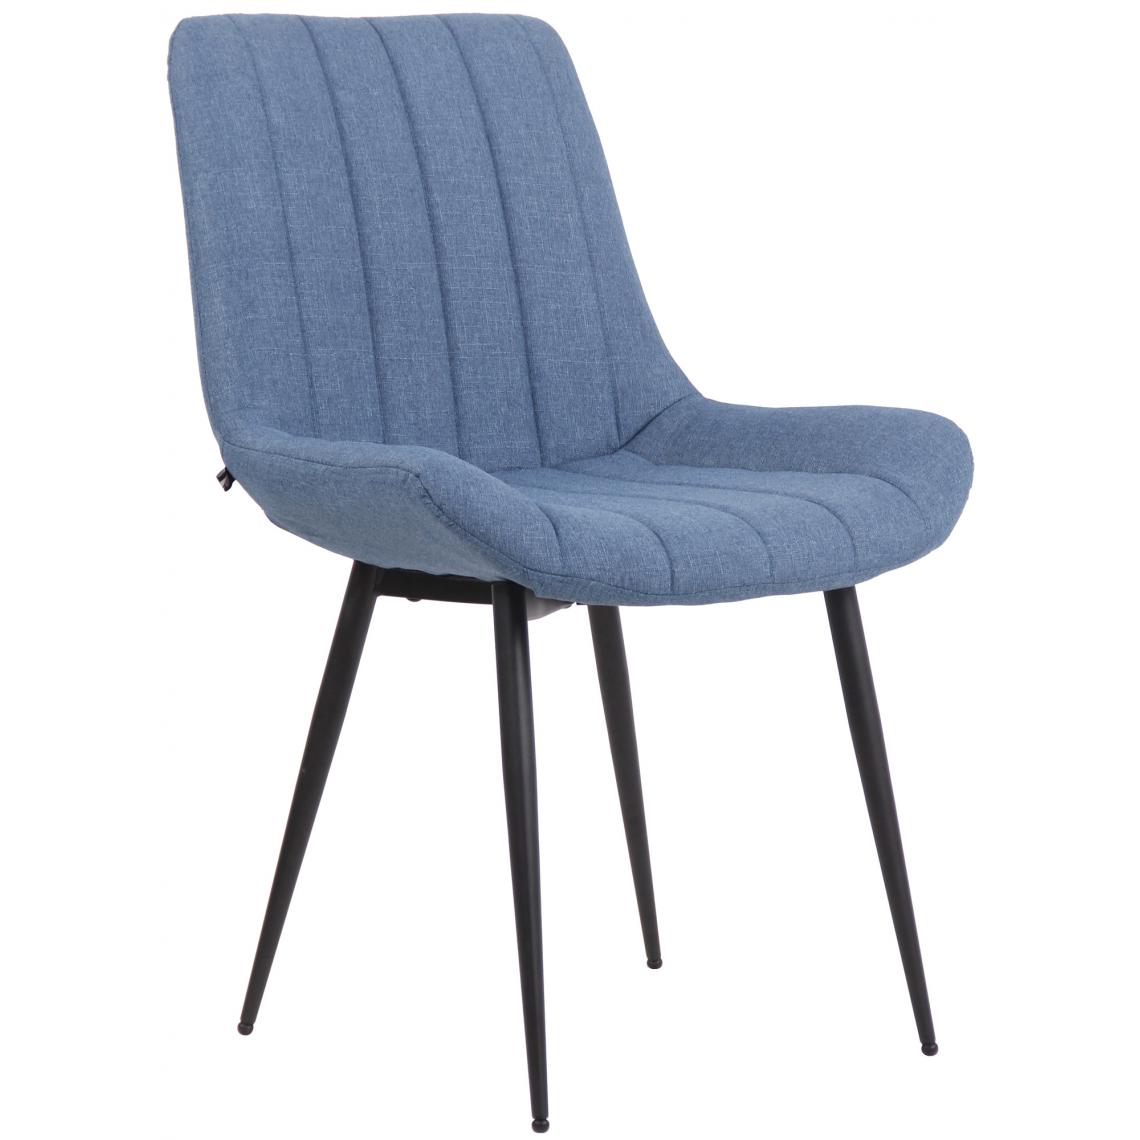 Icaverne - Admirable Chaise en tissu serie Brasilia couleur bleu - Chaises